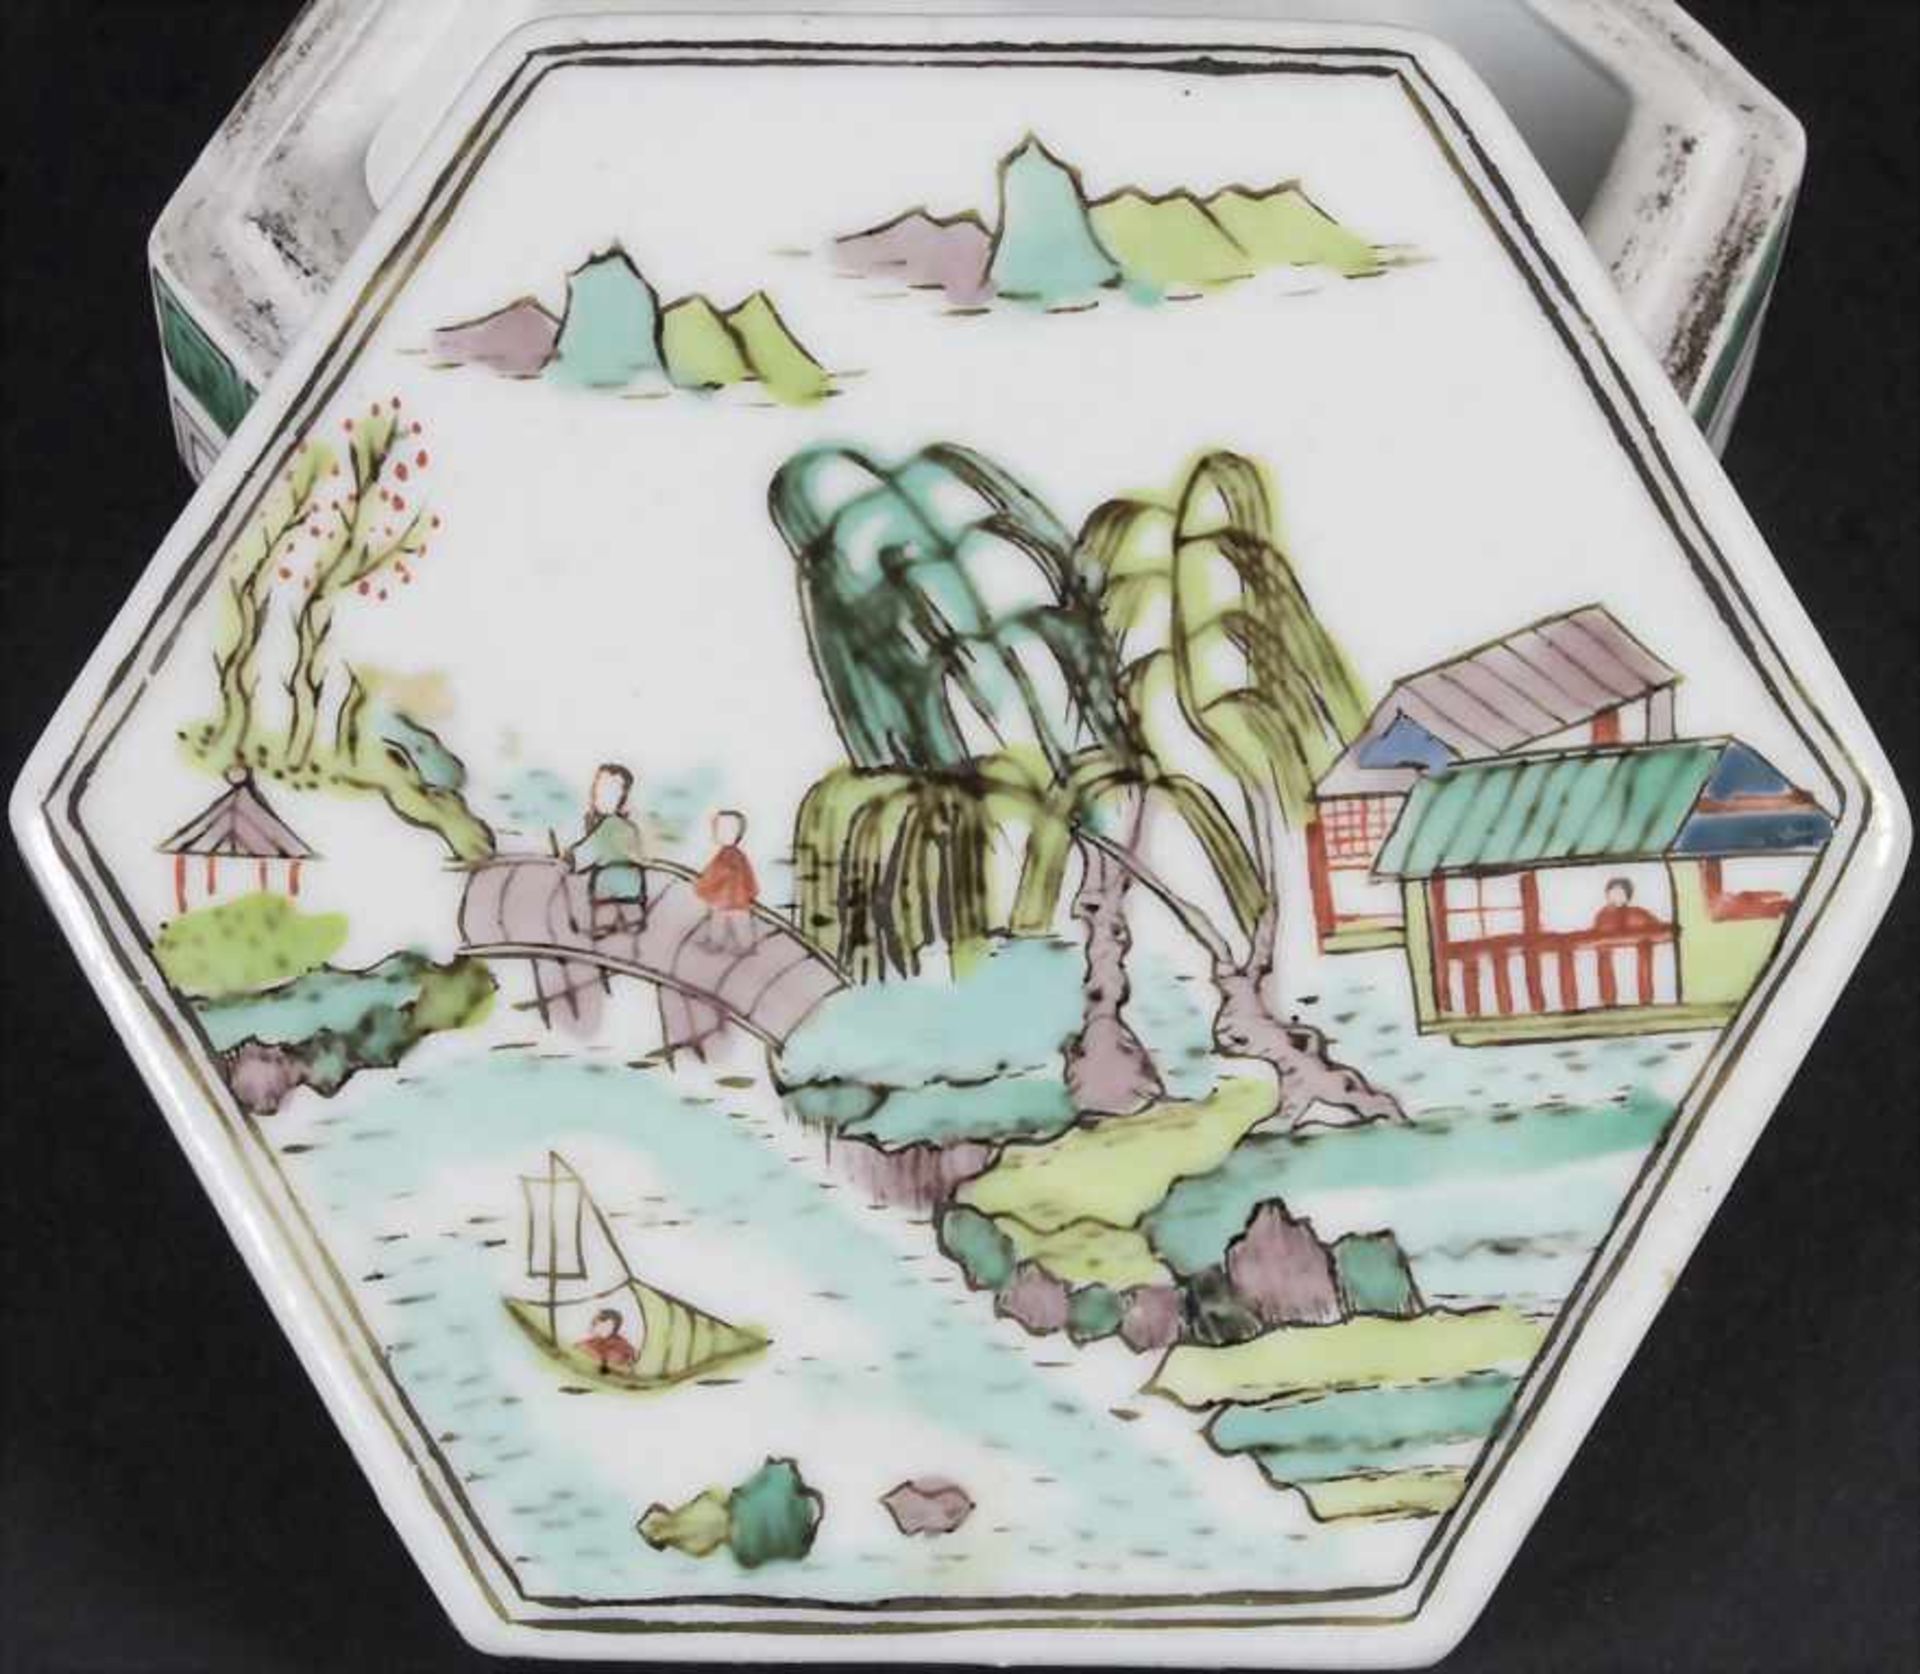 Porzellan-Deckeldose / A porcelain lidded box, China, Qing-Dynastie, wohl 18. Jh. - Image 3 of 5